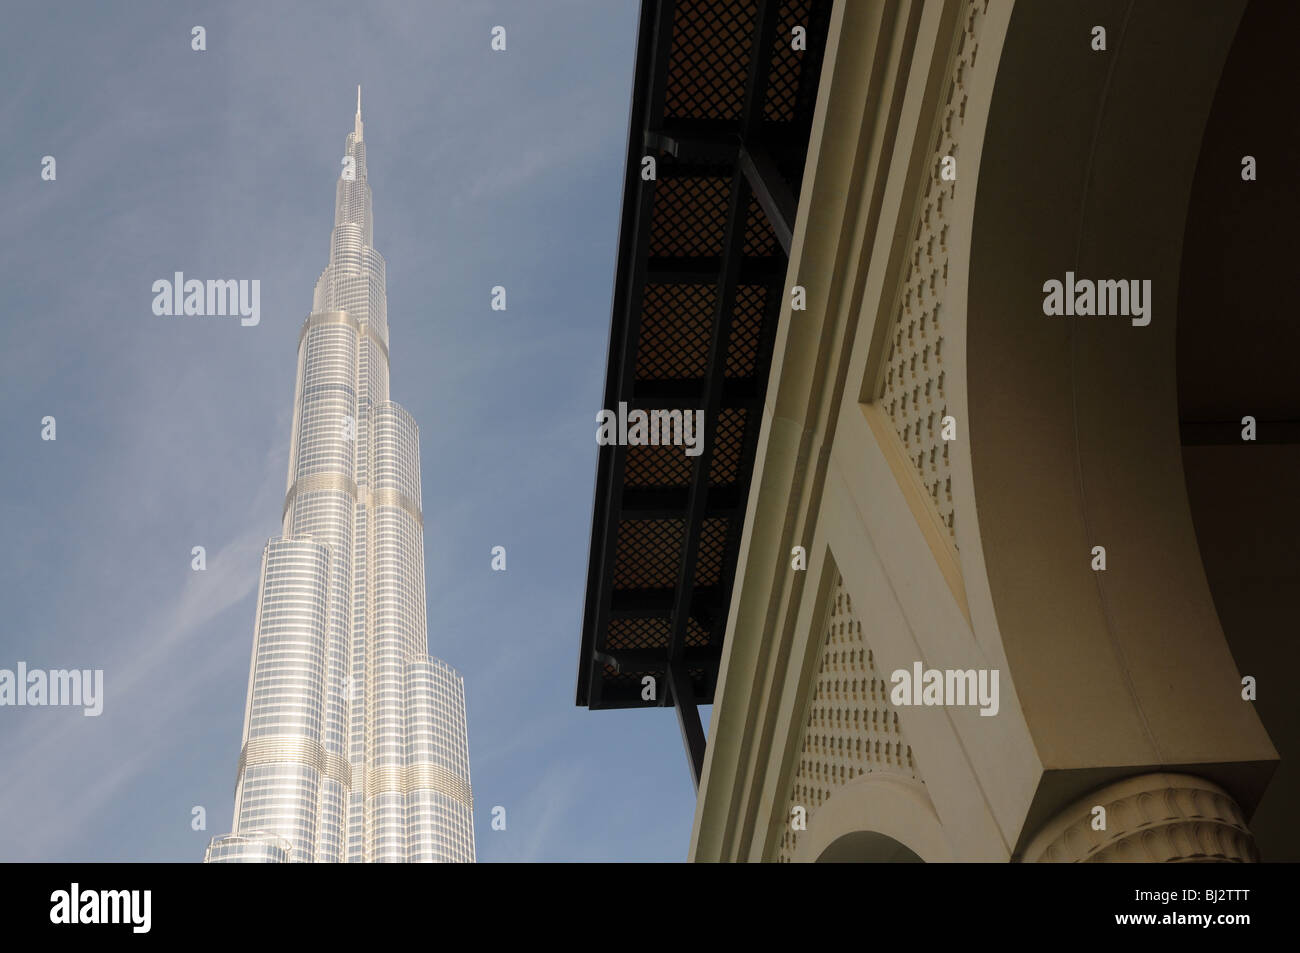 Burj Khalifa - highest skyscraper in the world. Dubai United Arab Emirates Stock Photo